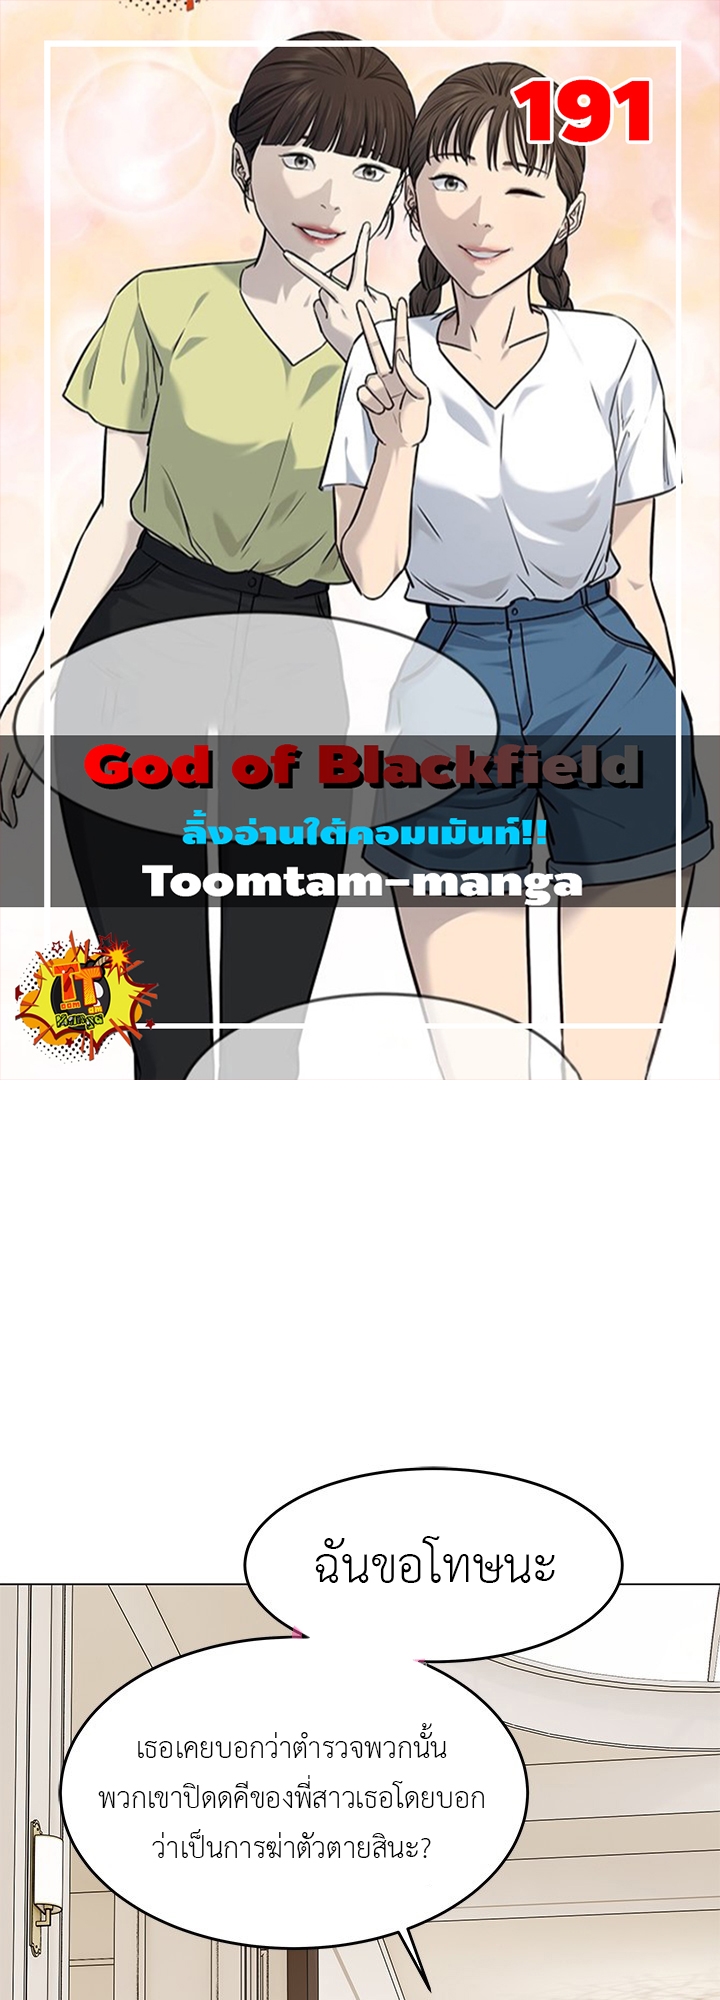 God of Blackfield 191 10 1 25670001